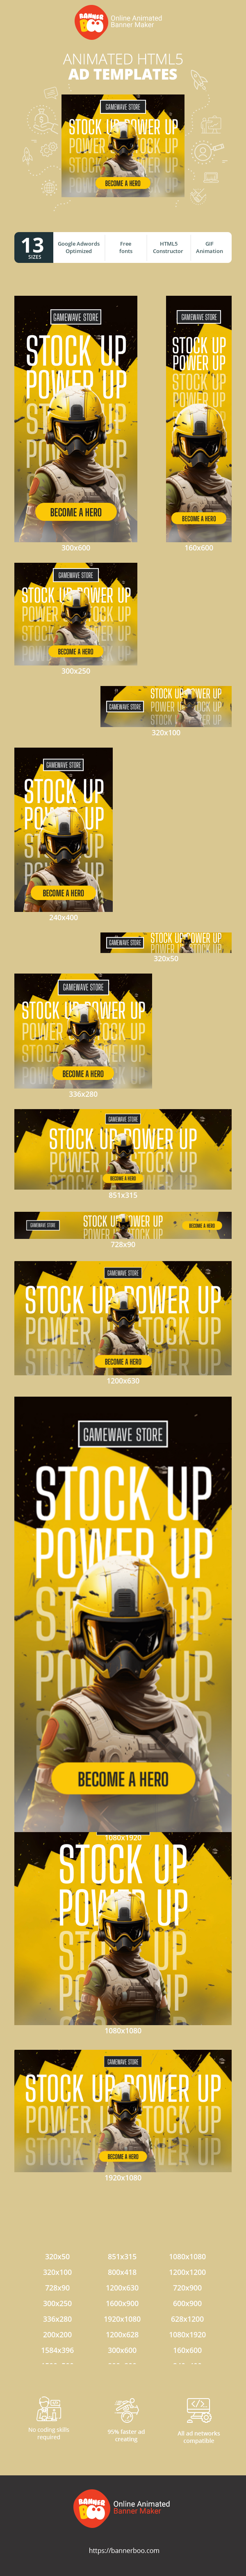 Szablon reklamy banerowej — Stock Up Power Up — Gaming